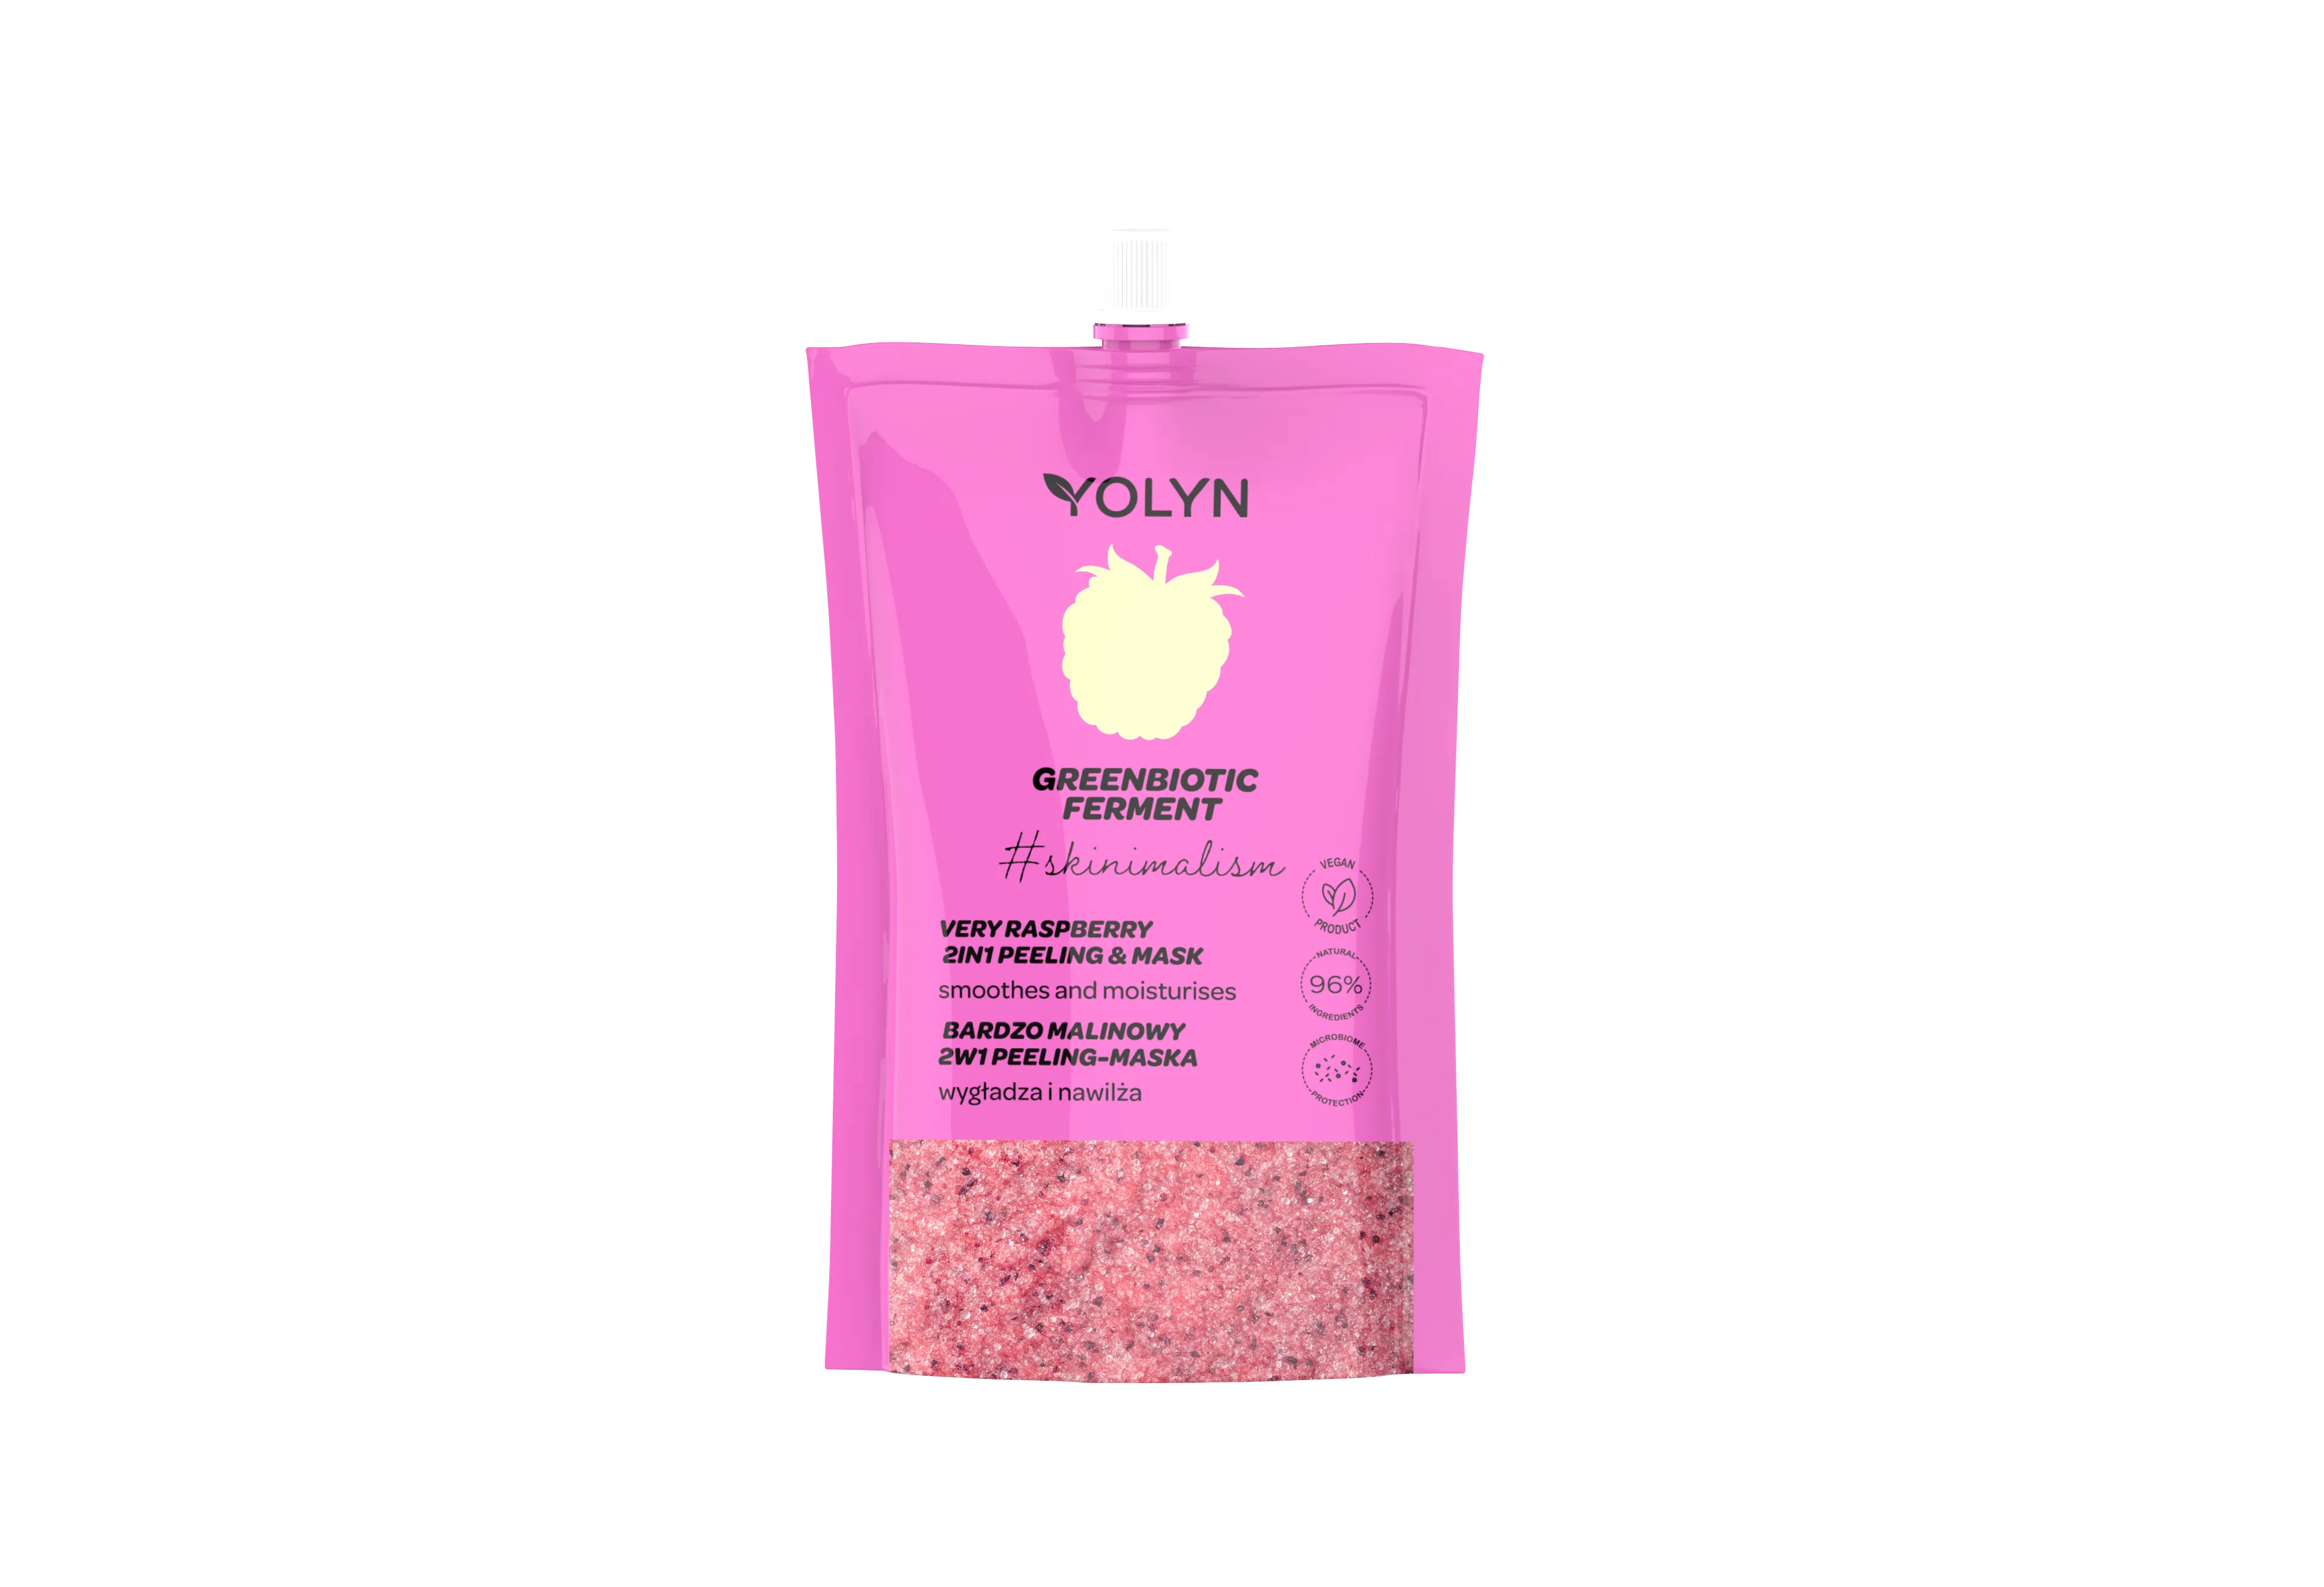 Yolyn Greenbiotic Ferment bardzo malinowy peeling-maska 2w1, 50 ml